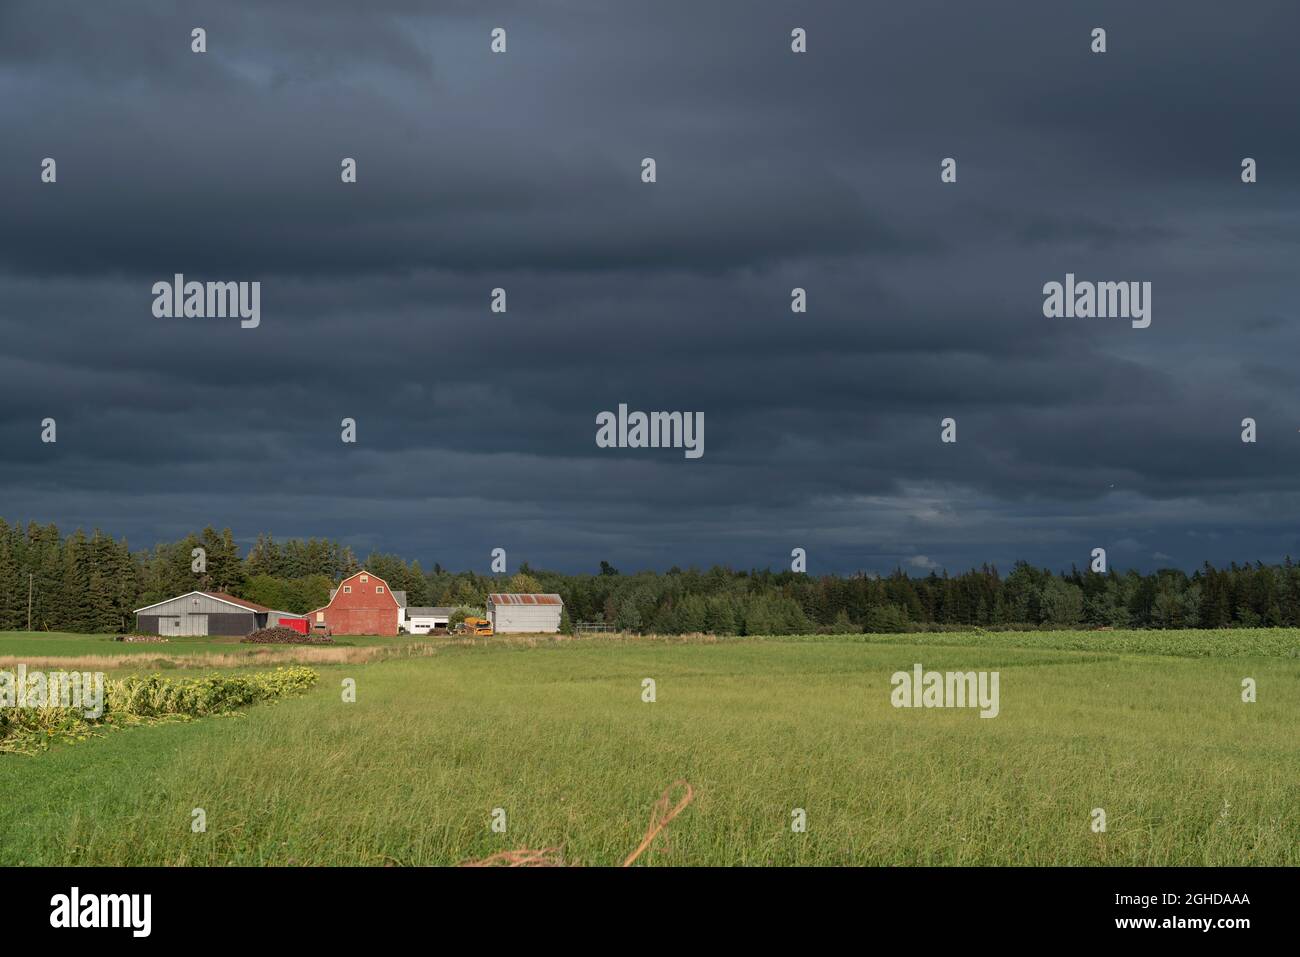 Farm fields under dark clouds in rural Prince Edward Islnd, Canada. Stock Photo